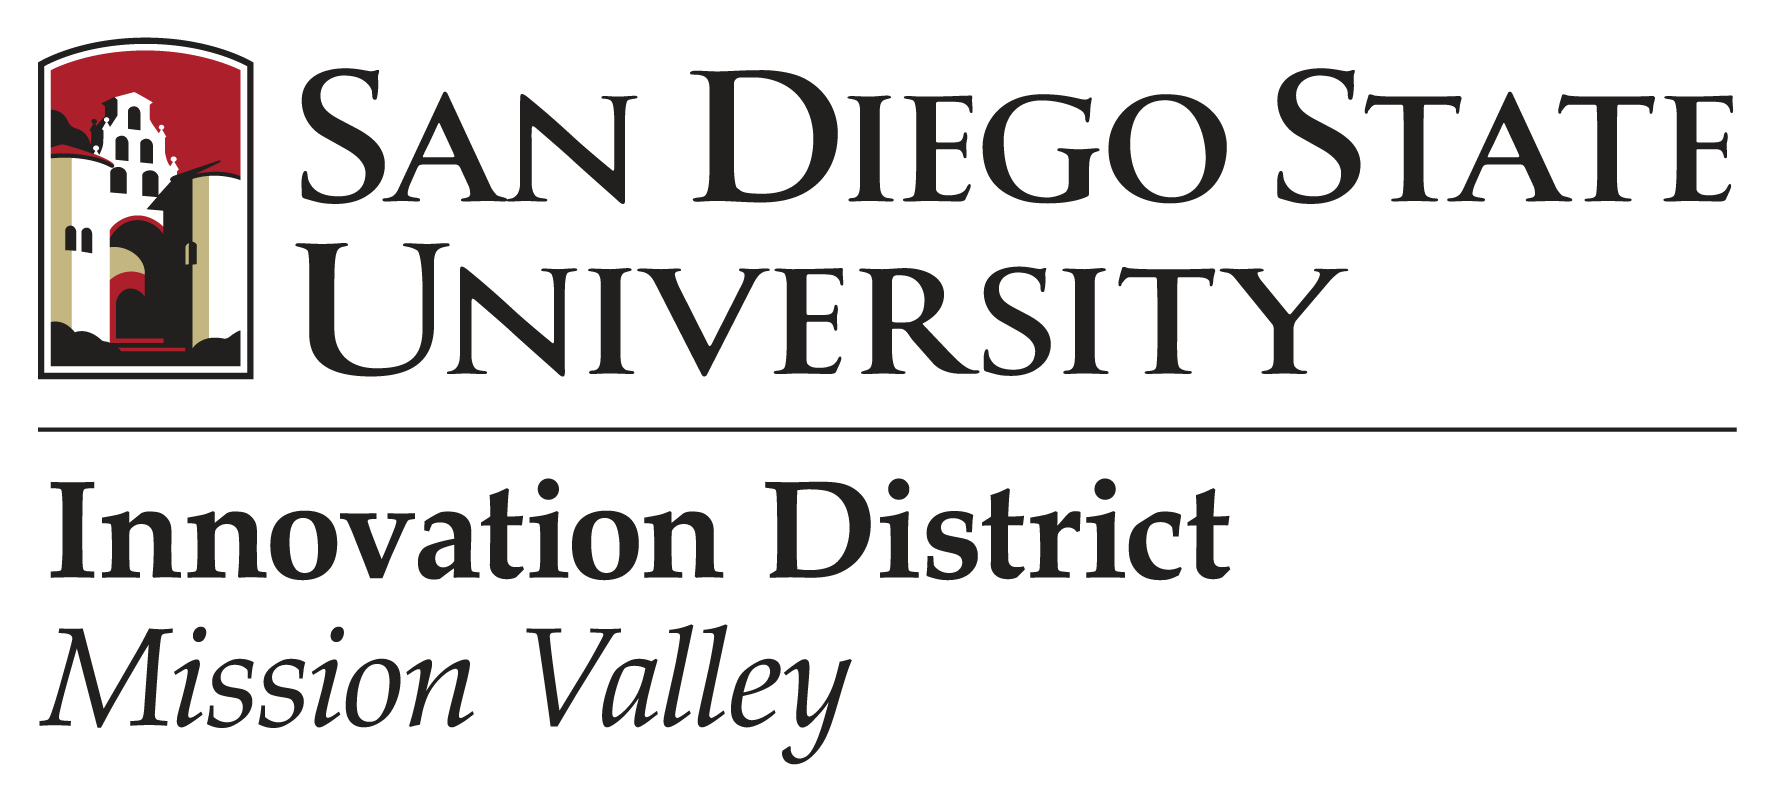 San Diego State University - Innovation District logo